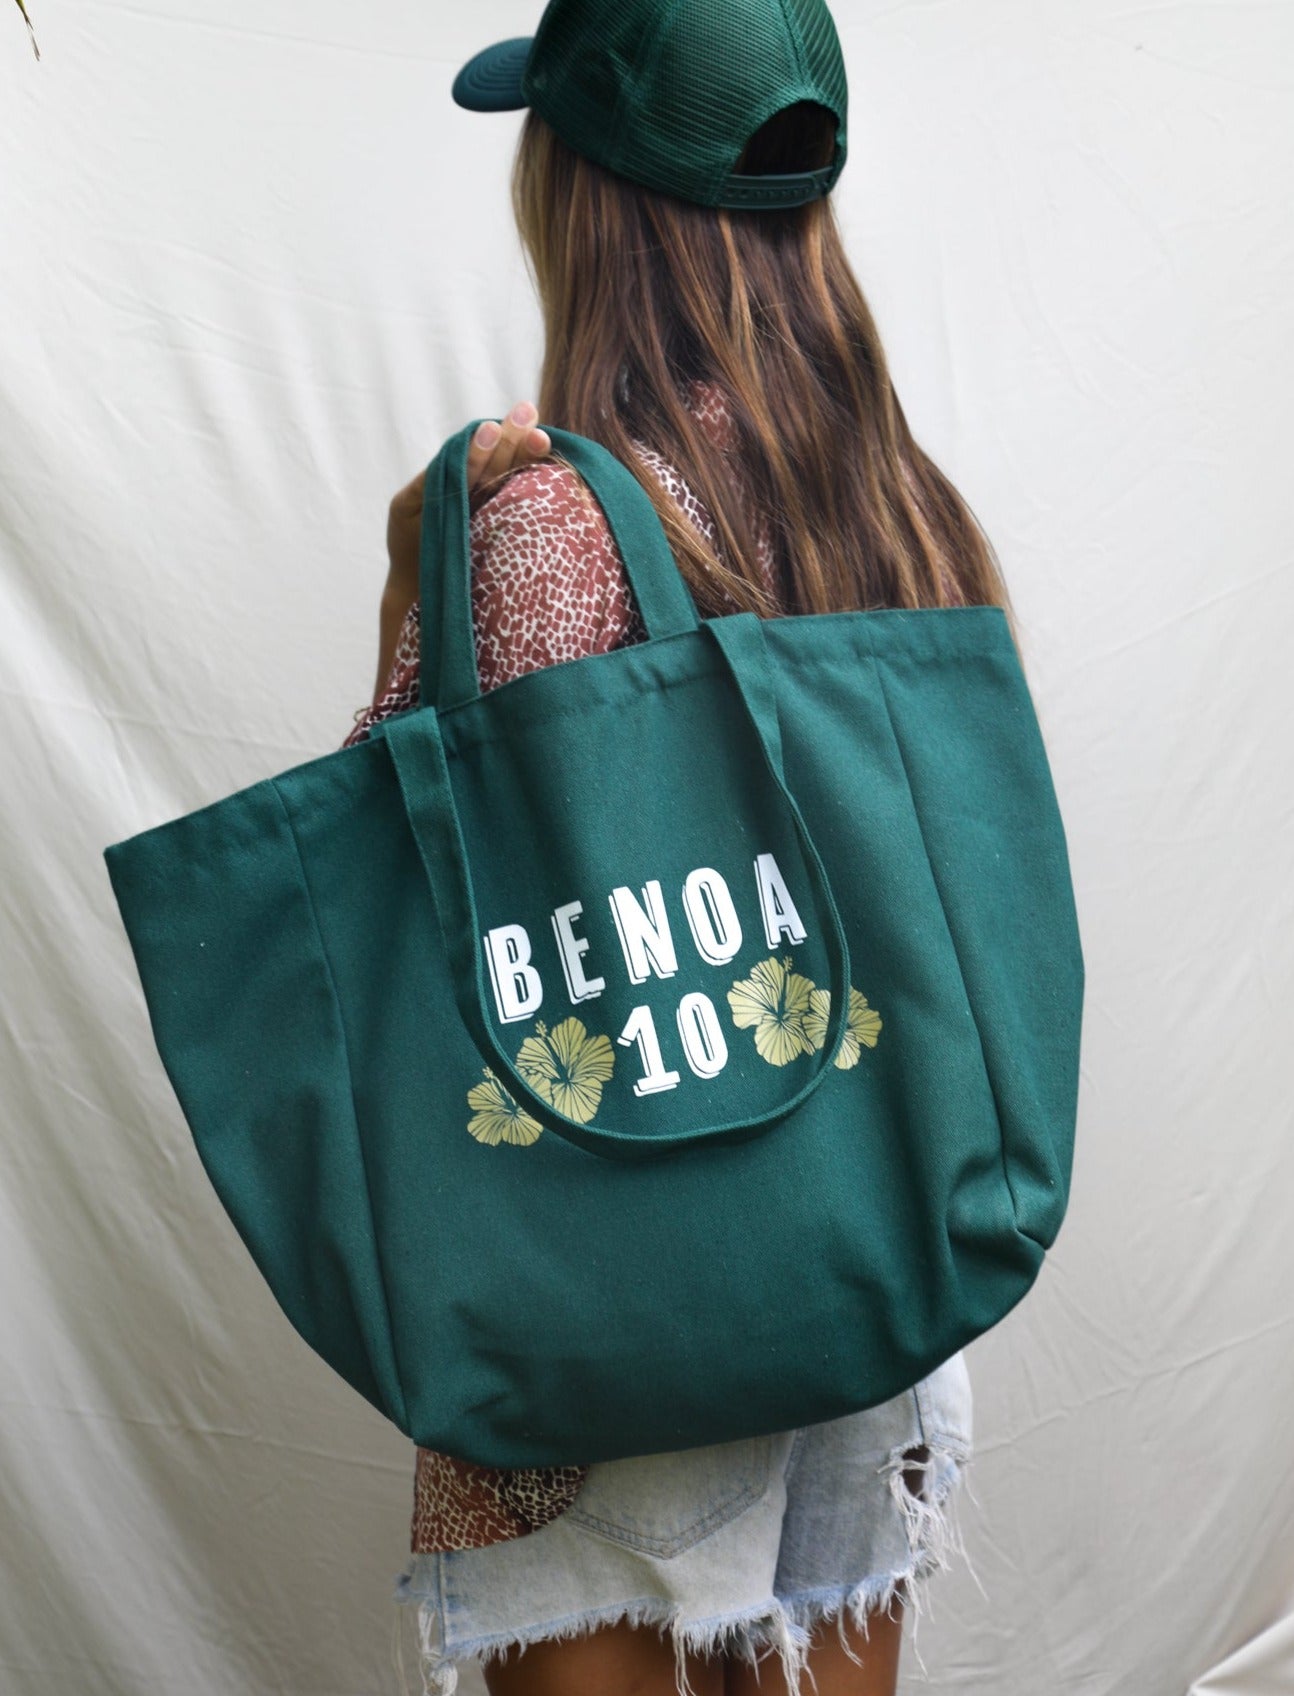 Bday Exclusive - "BENOA 10" Large Tote Bag